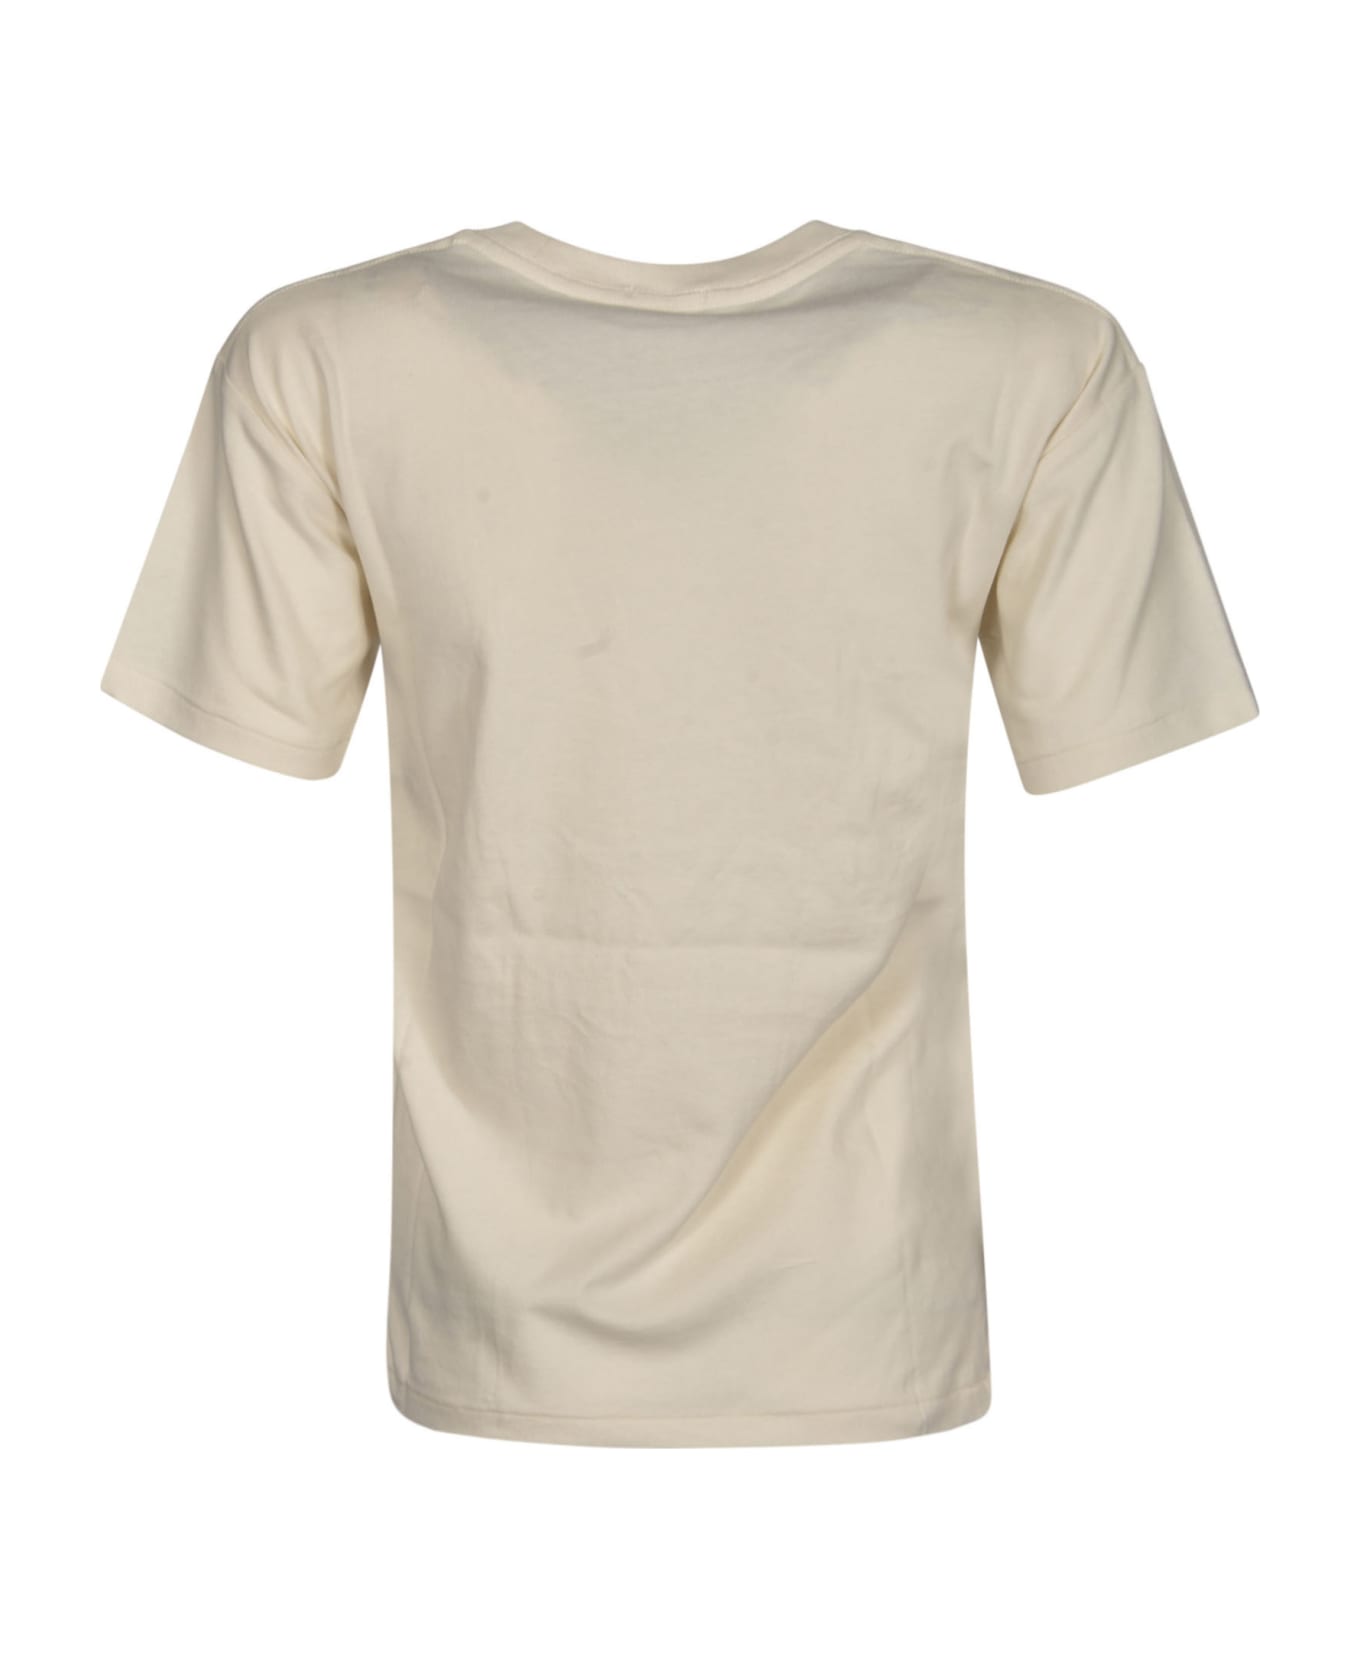 Polo Ralph Lauren Quality Goods T-shirt - Antique cream Tシャツ